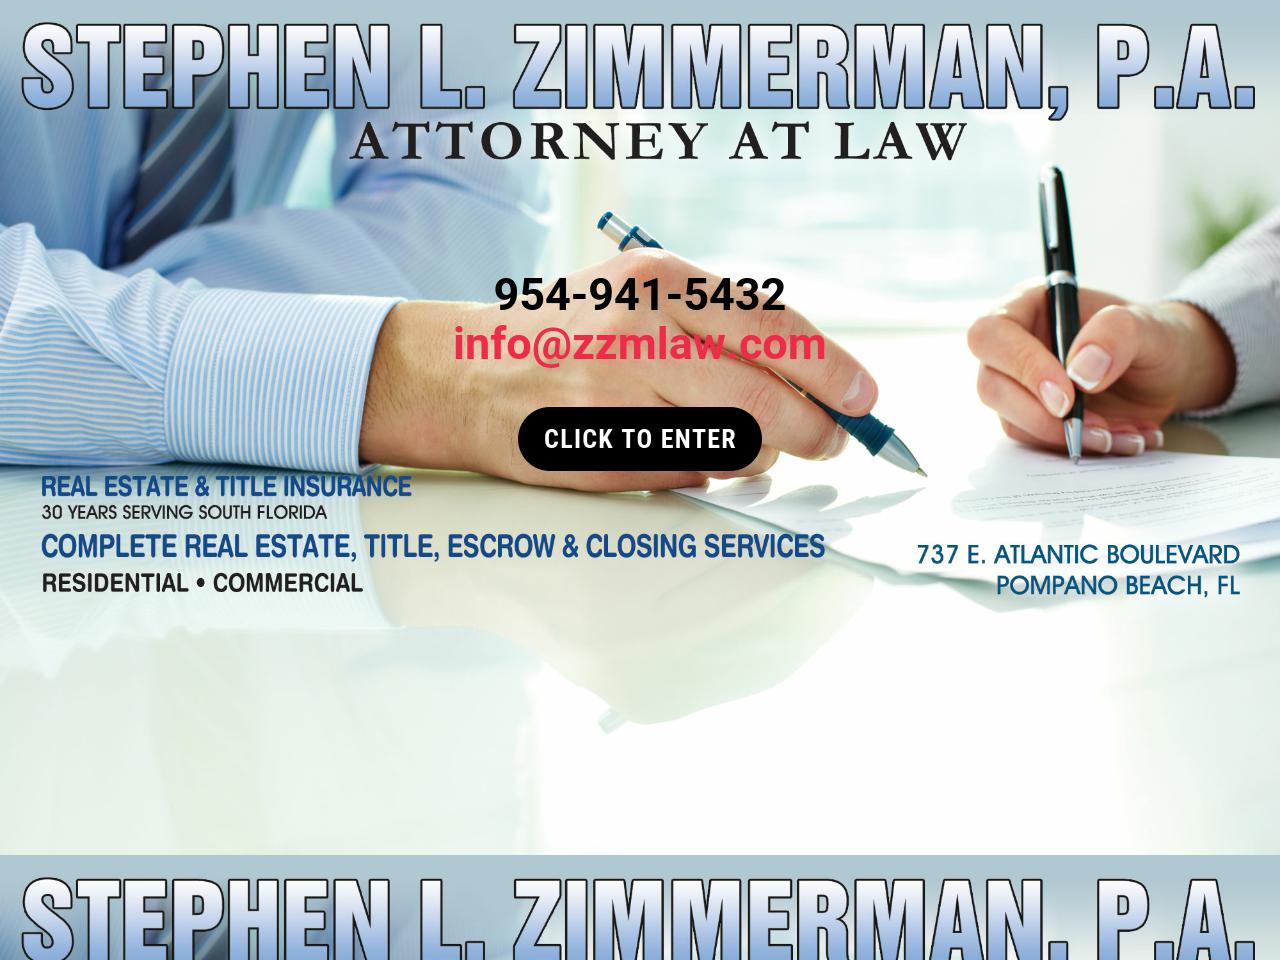 Zimmerman Stephen L., P.A. - Pompano Beach FL Lawyers